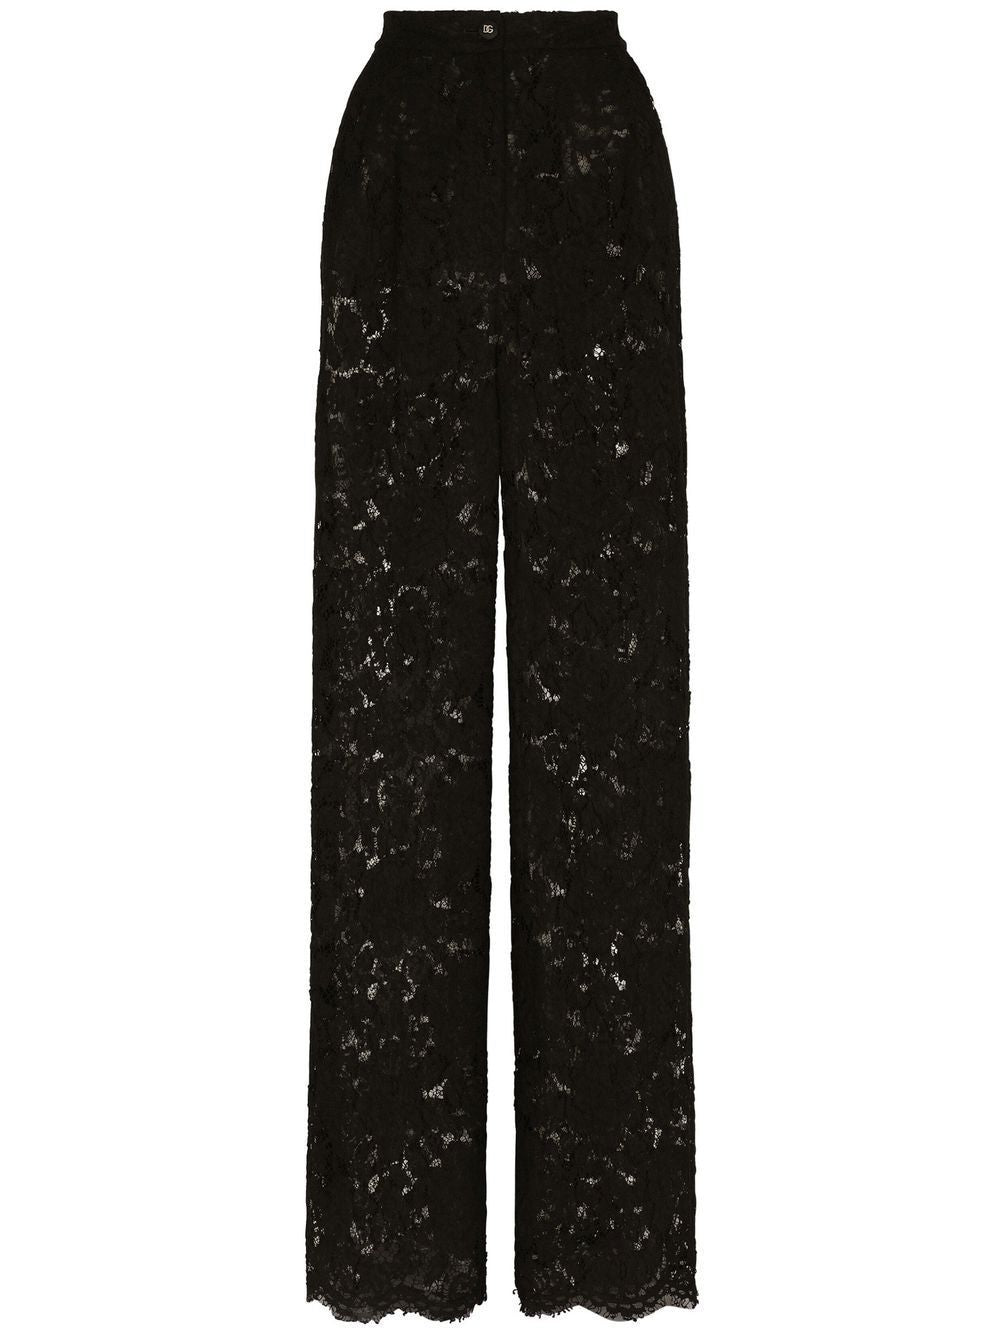 DOLCE & GABBANA Elegant Lace Pants for Women - Black